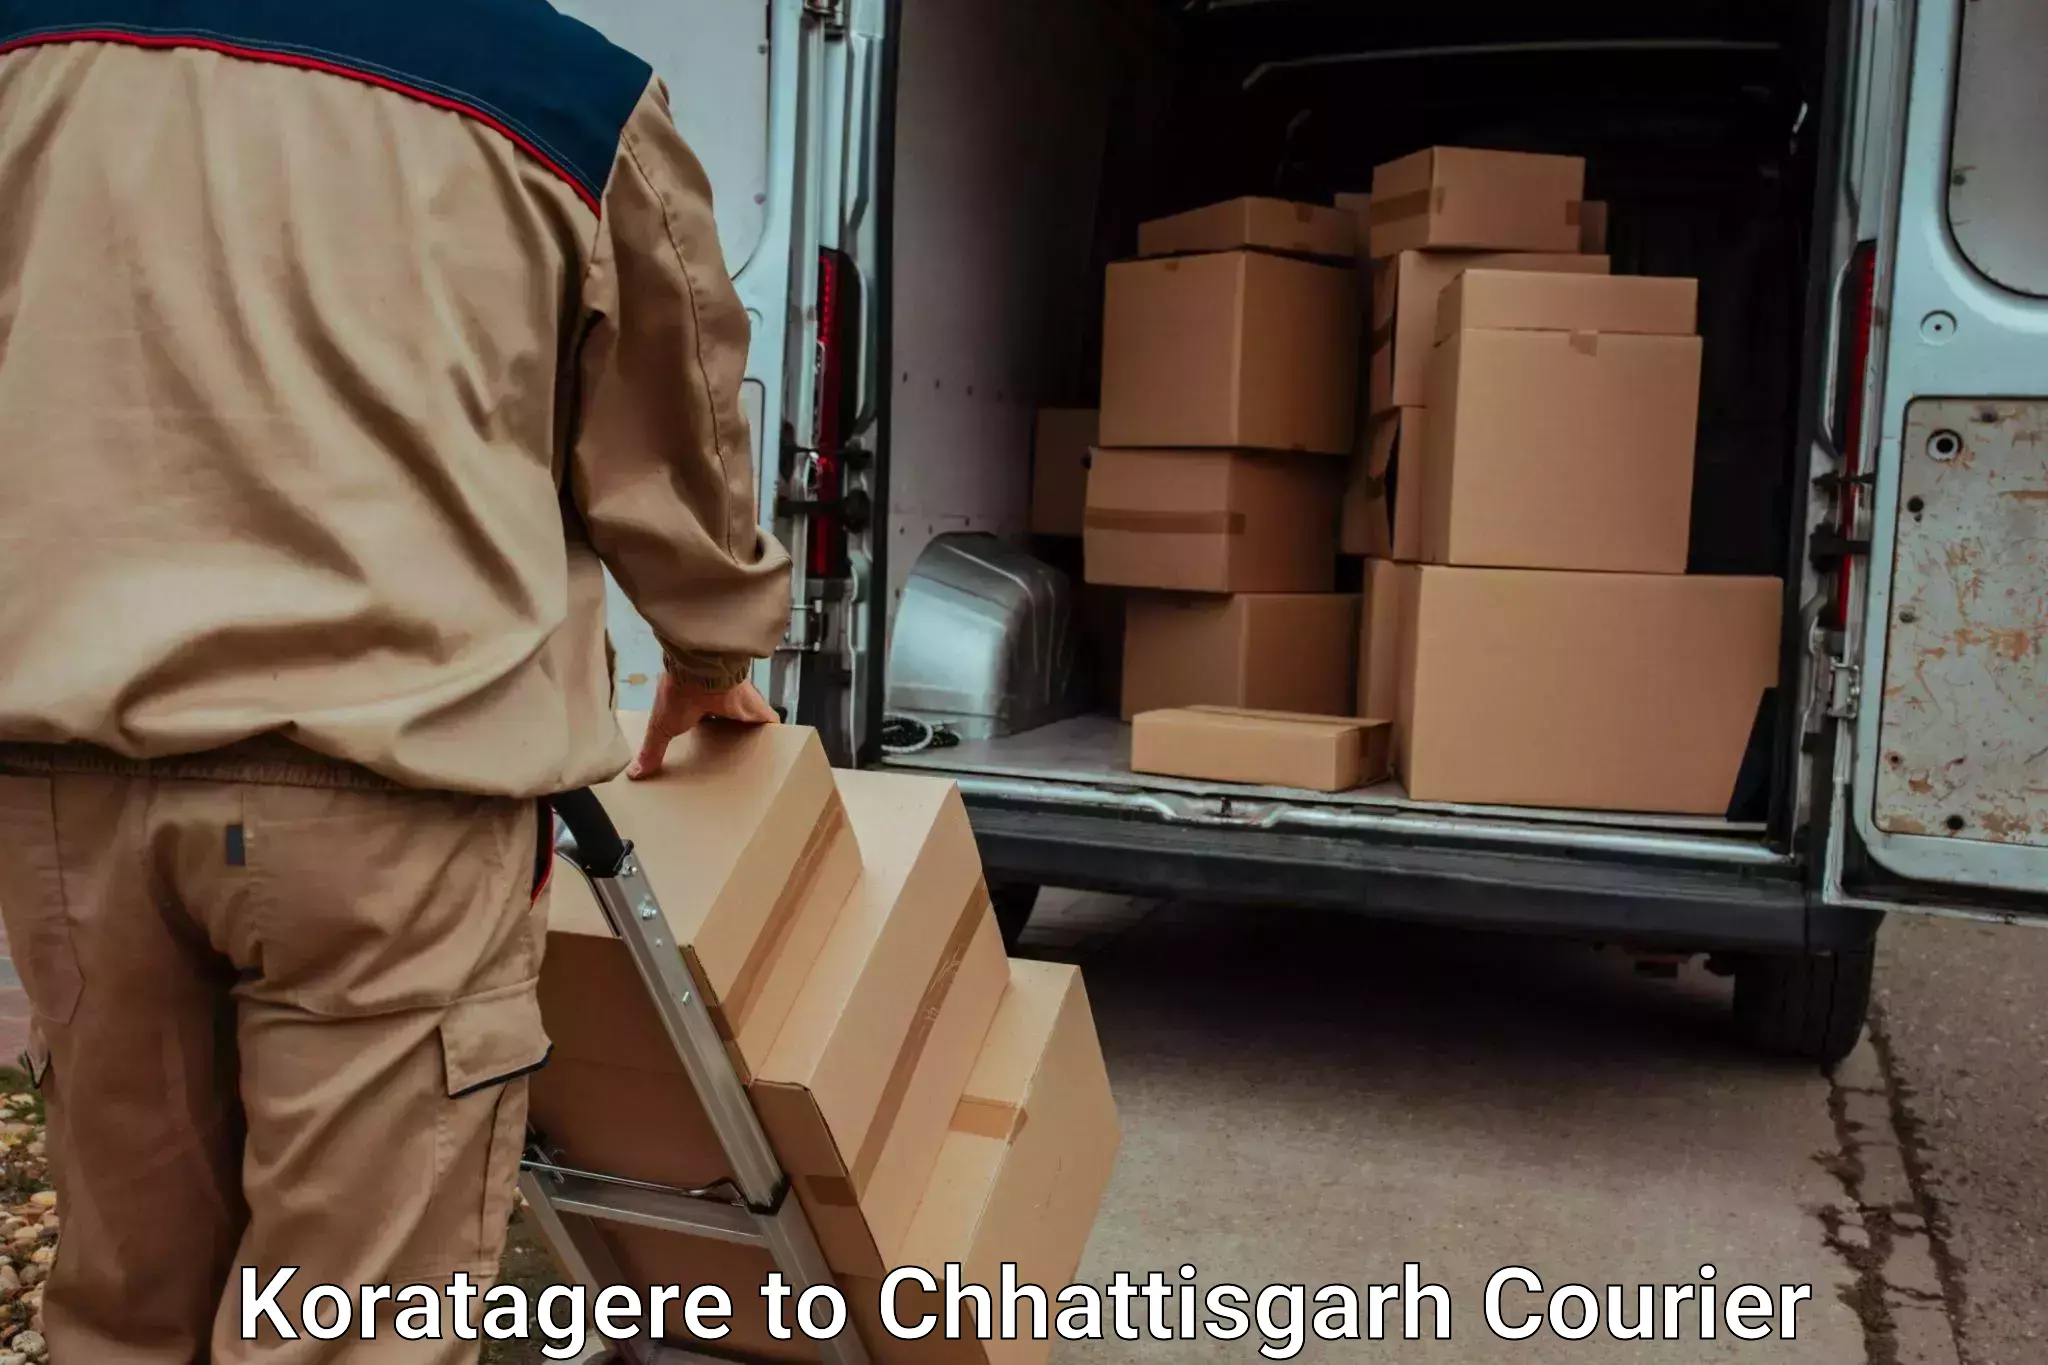 Professional moving company Koratagere to Bilaspur